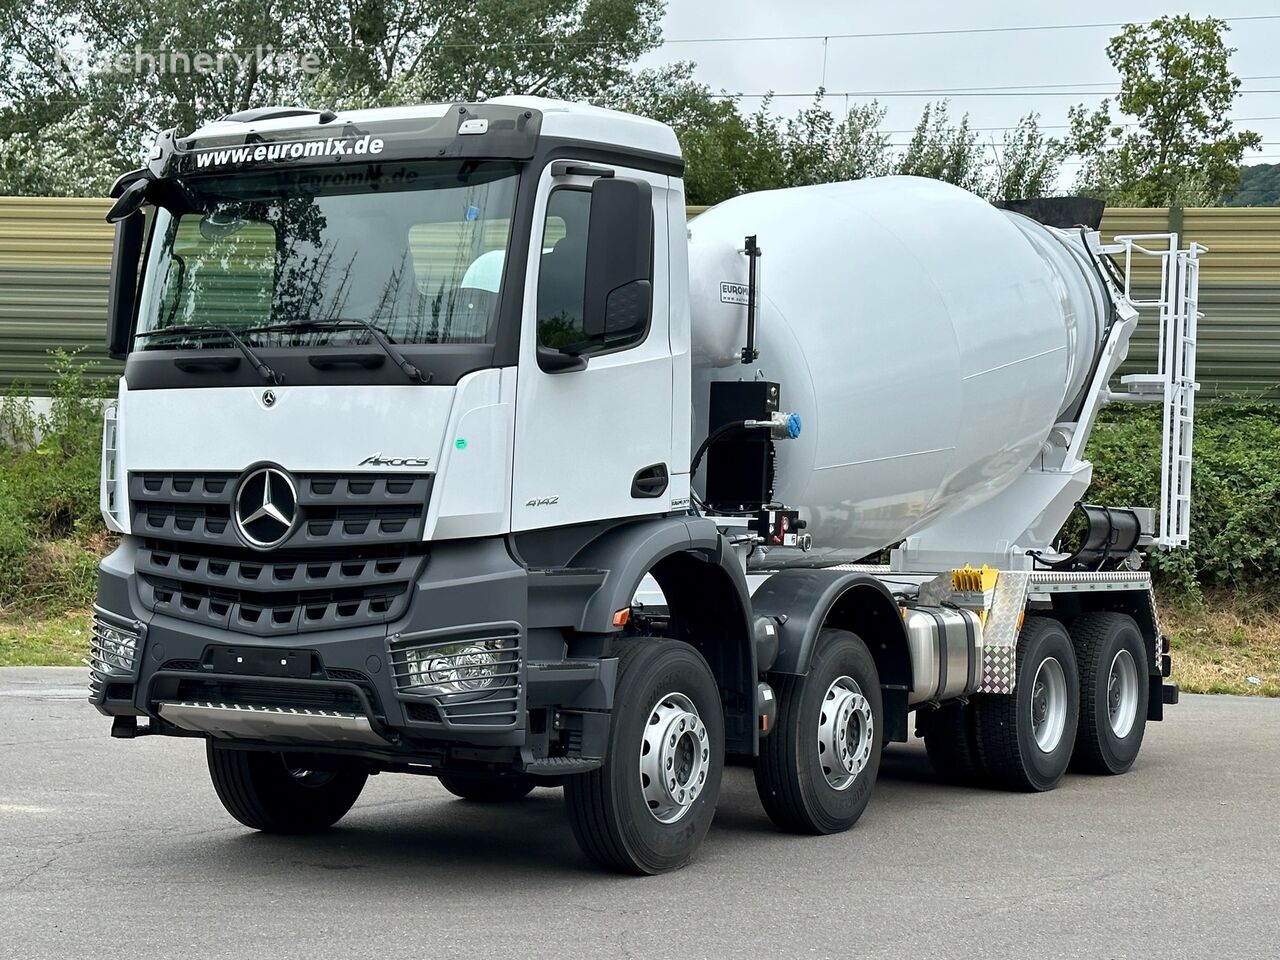 new Euromix MTP MTP EM 10 R on chassis Mercedes-Benz AROCS 5  4142 B  concrete mixer truck